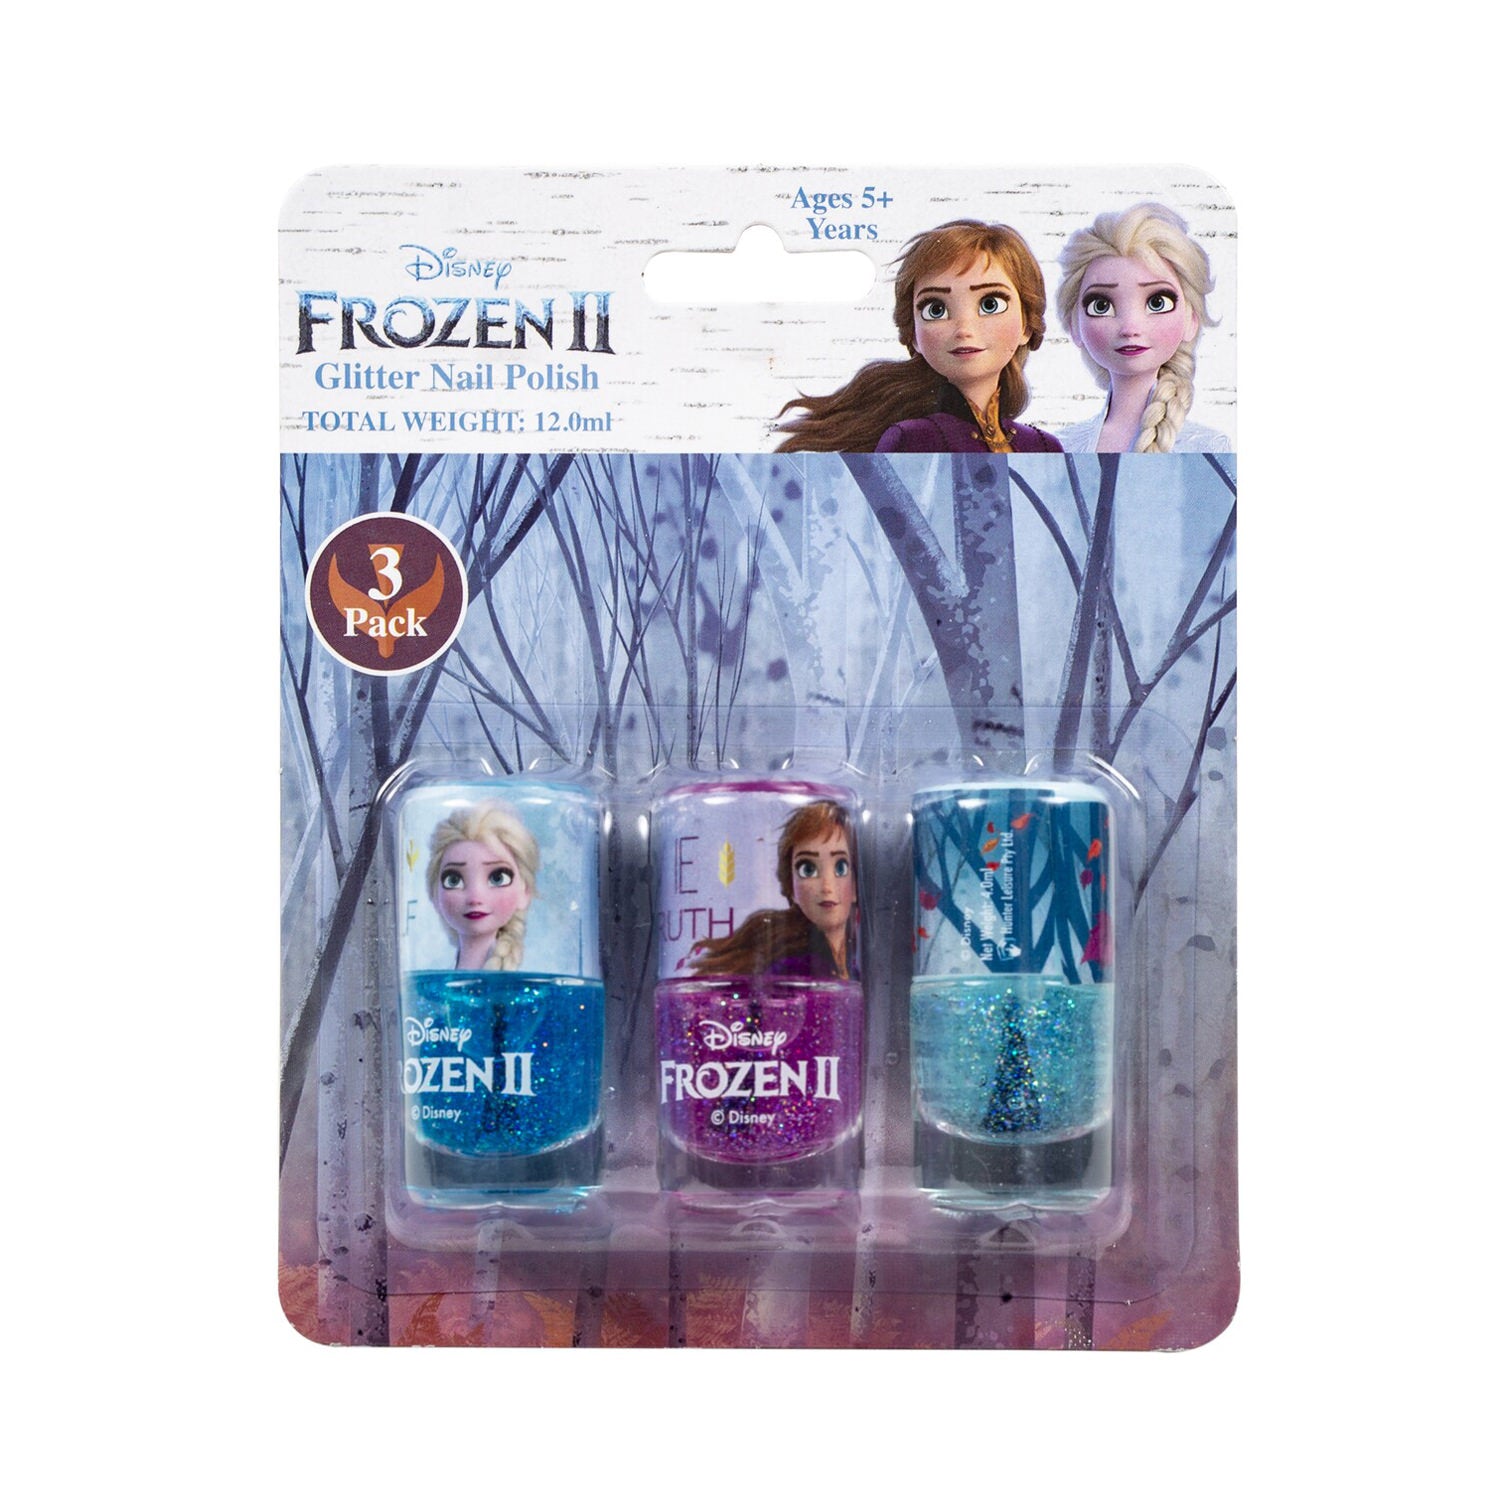 8-Pack Girls Disney Frozen 2 Nail Polish Gift Set | Collections Etc.